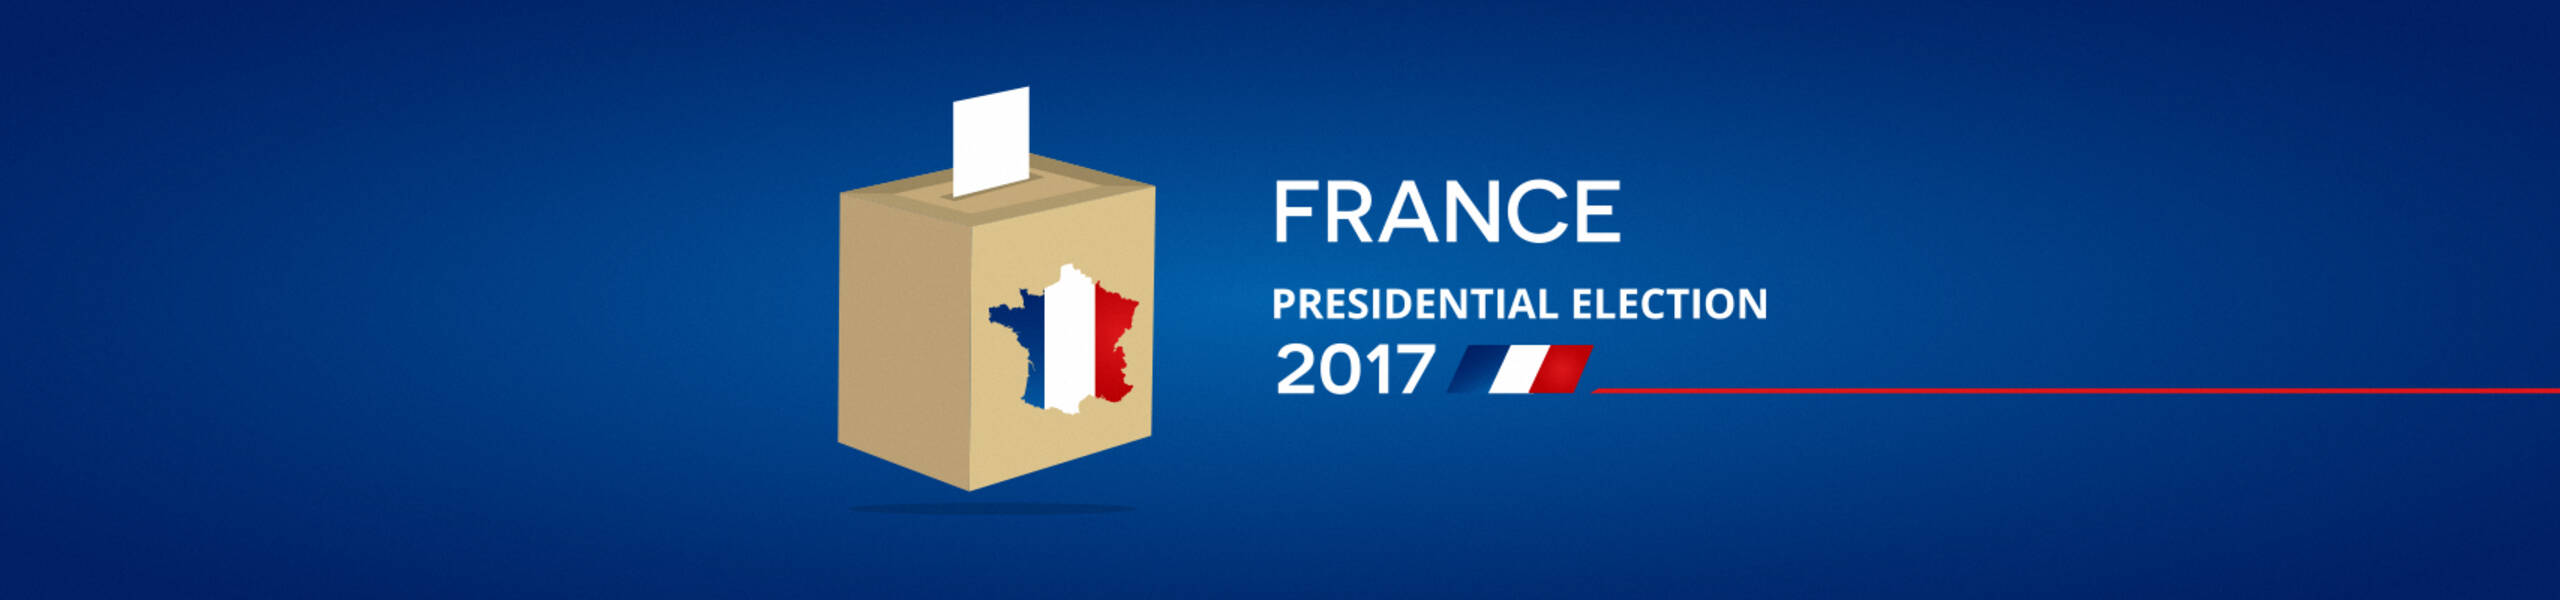 Perhatian: Pemilihan Presiden Perancis